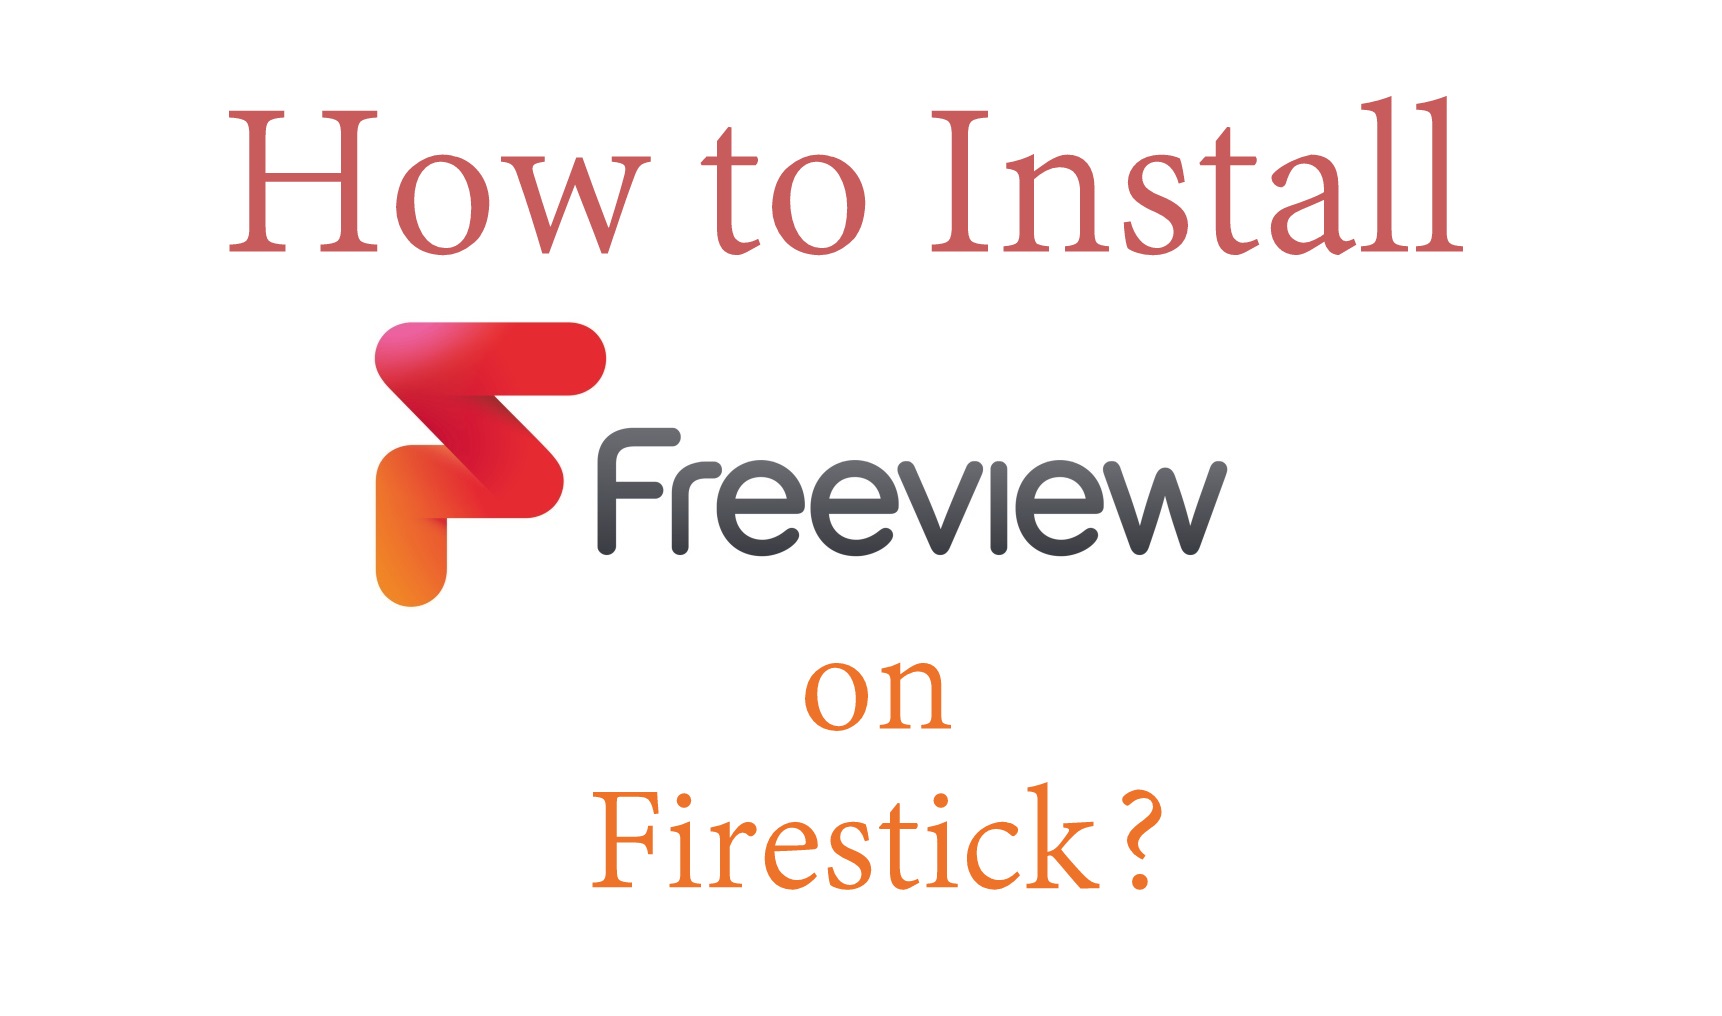 Cara menginstal Freeview di Firestick / Fire TV [2020] 3